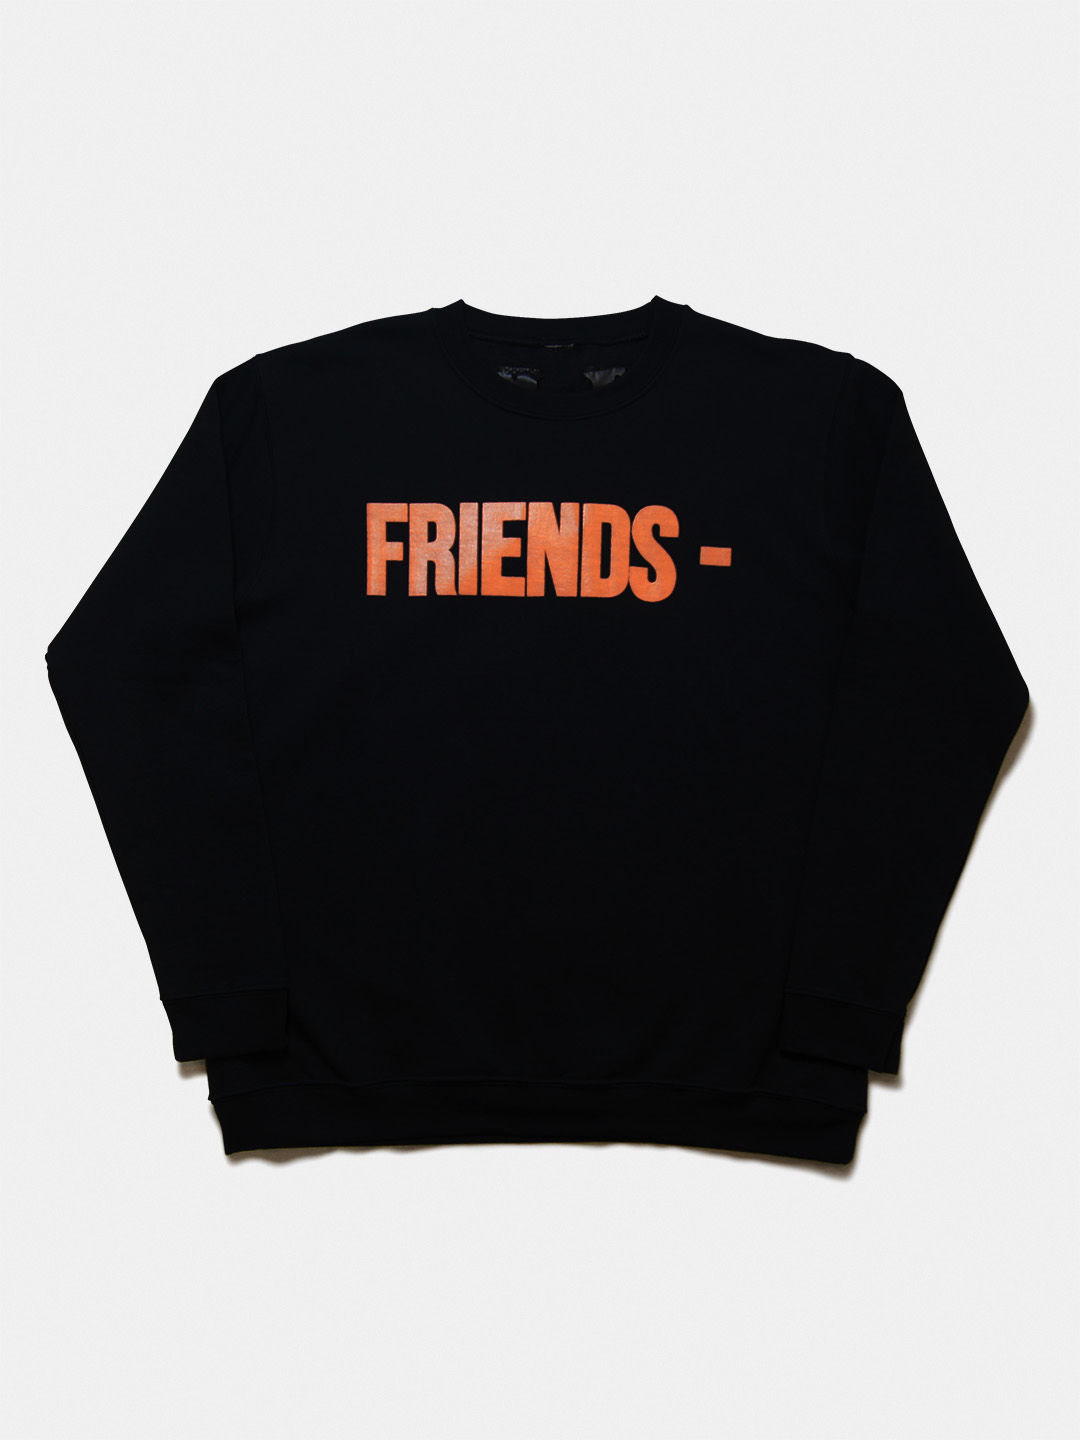 vlone friends sweatshirt